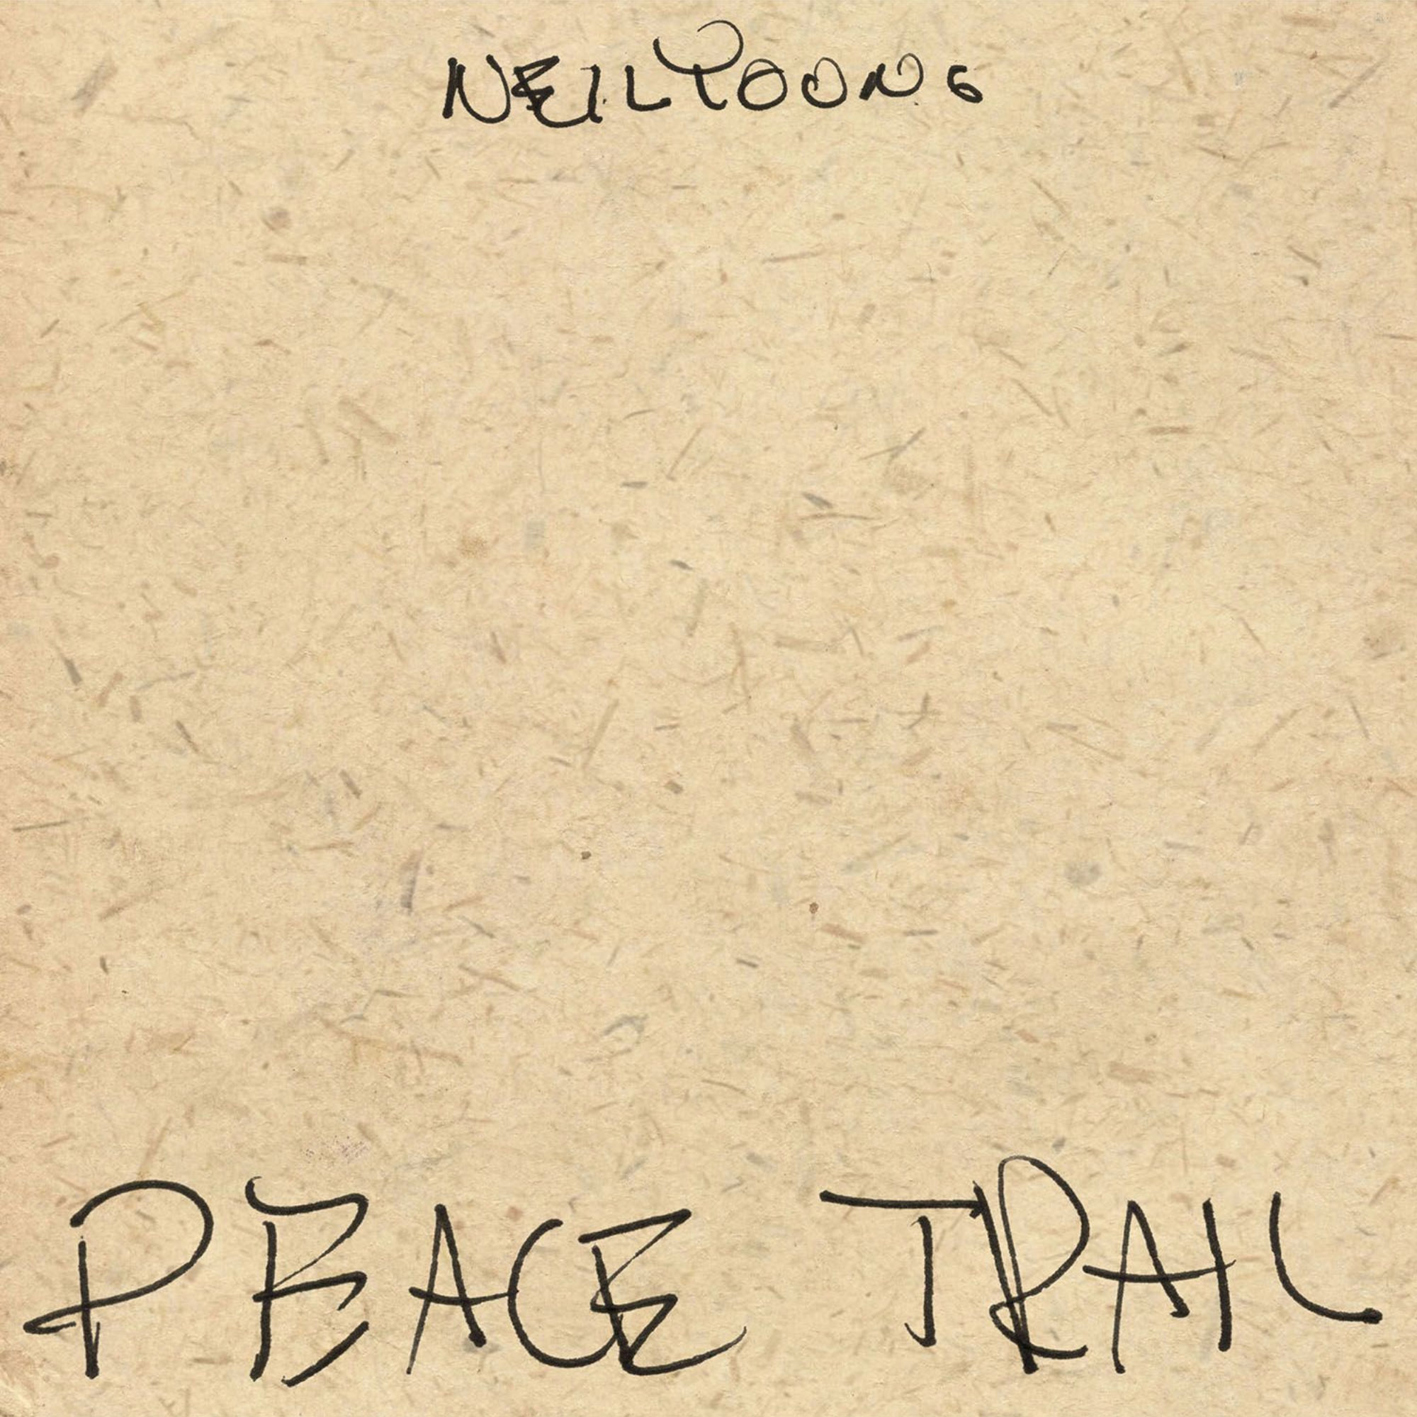 Neil Young – Peace Trail (2016) [HDTracks FLAC 24bit/192Hz]